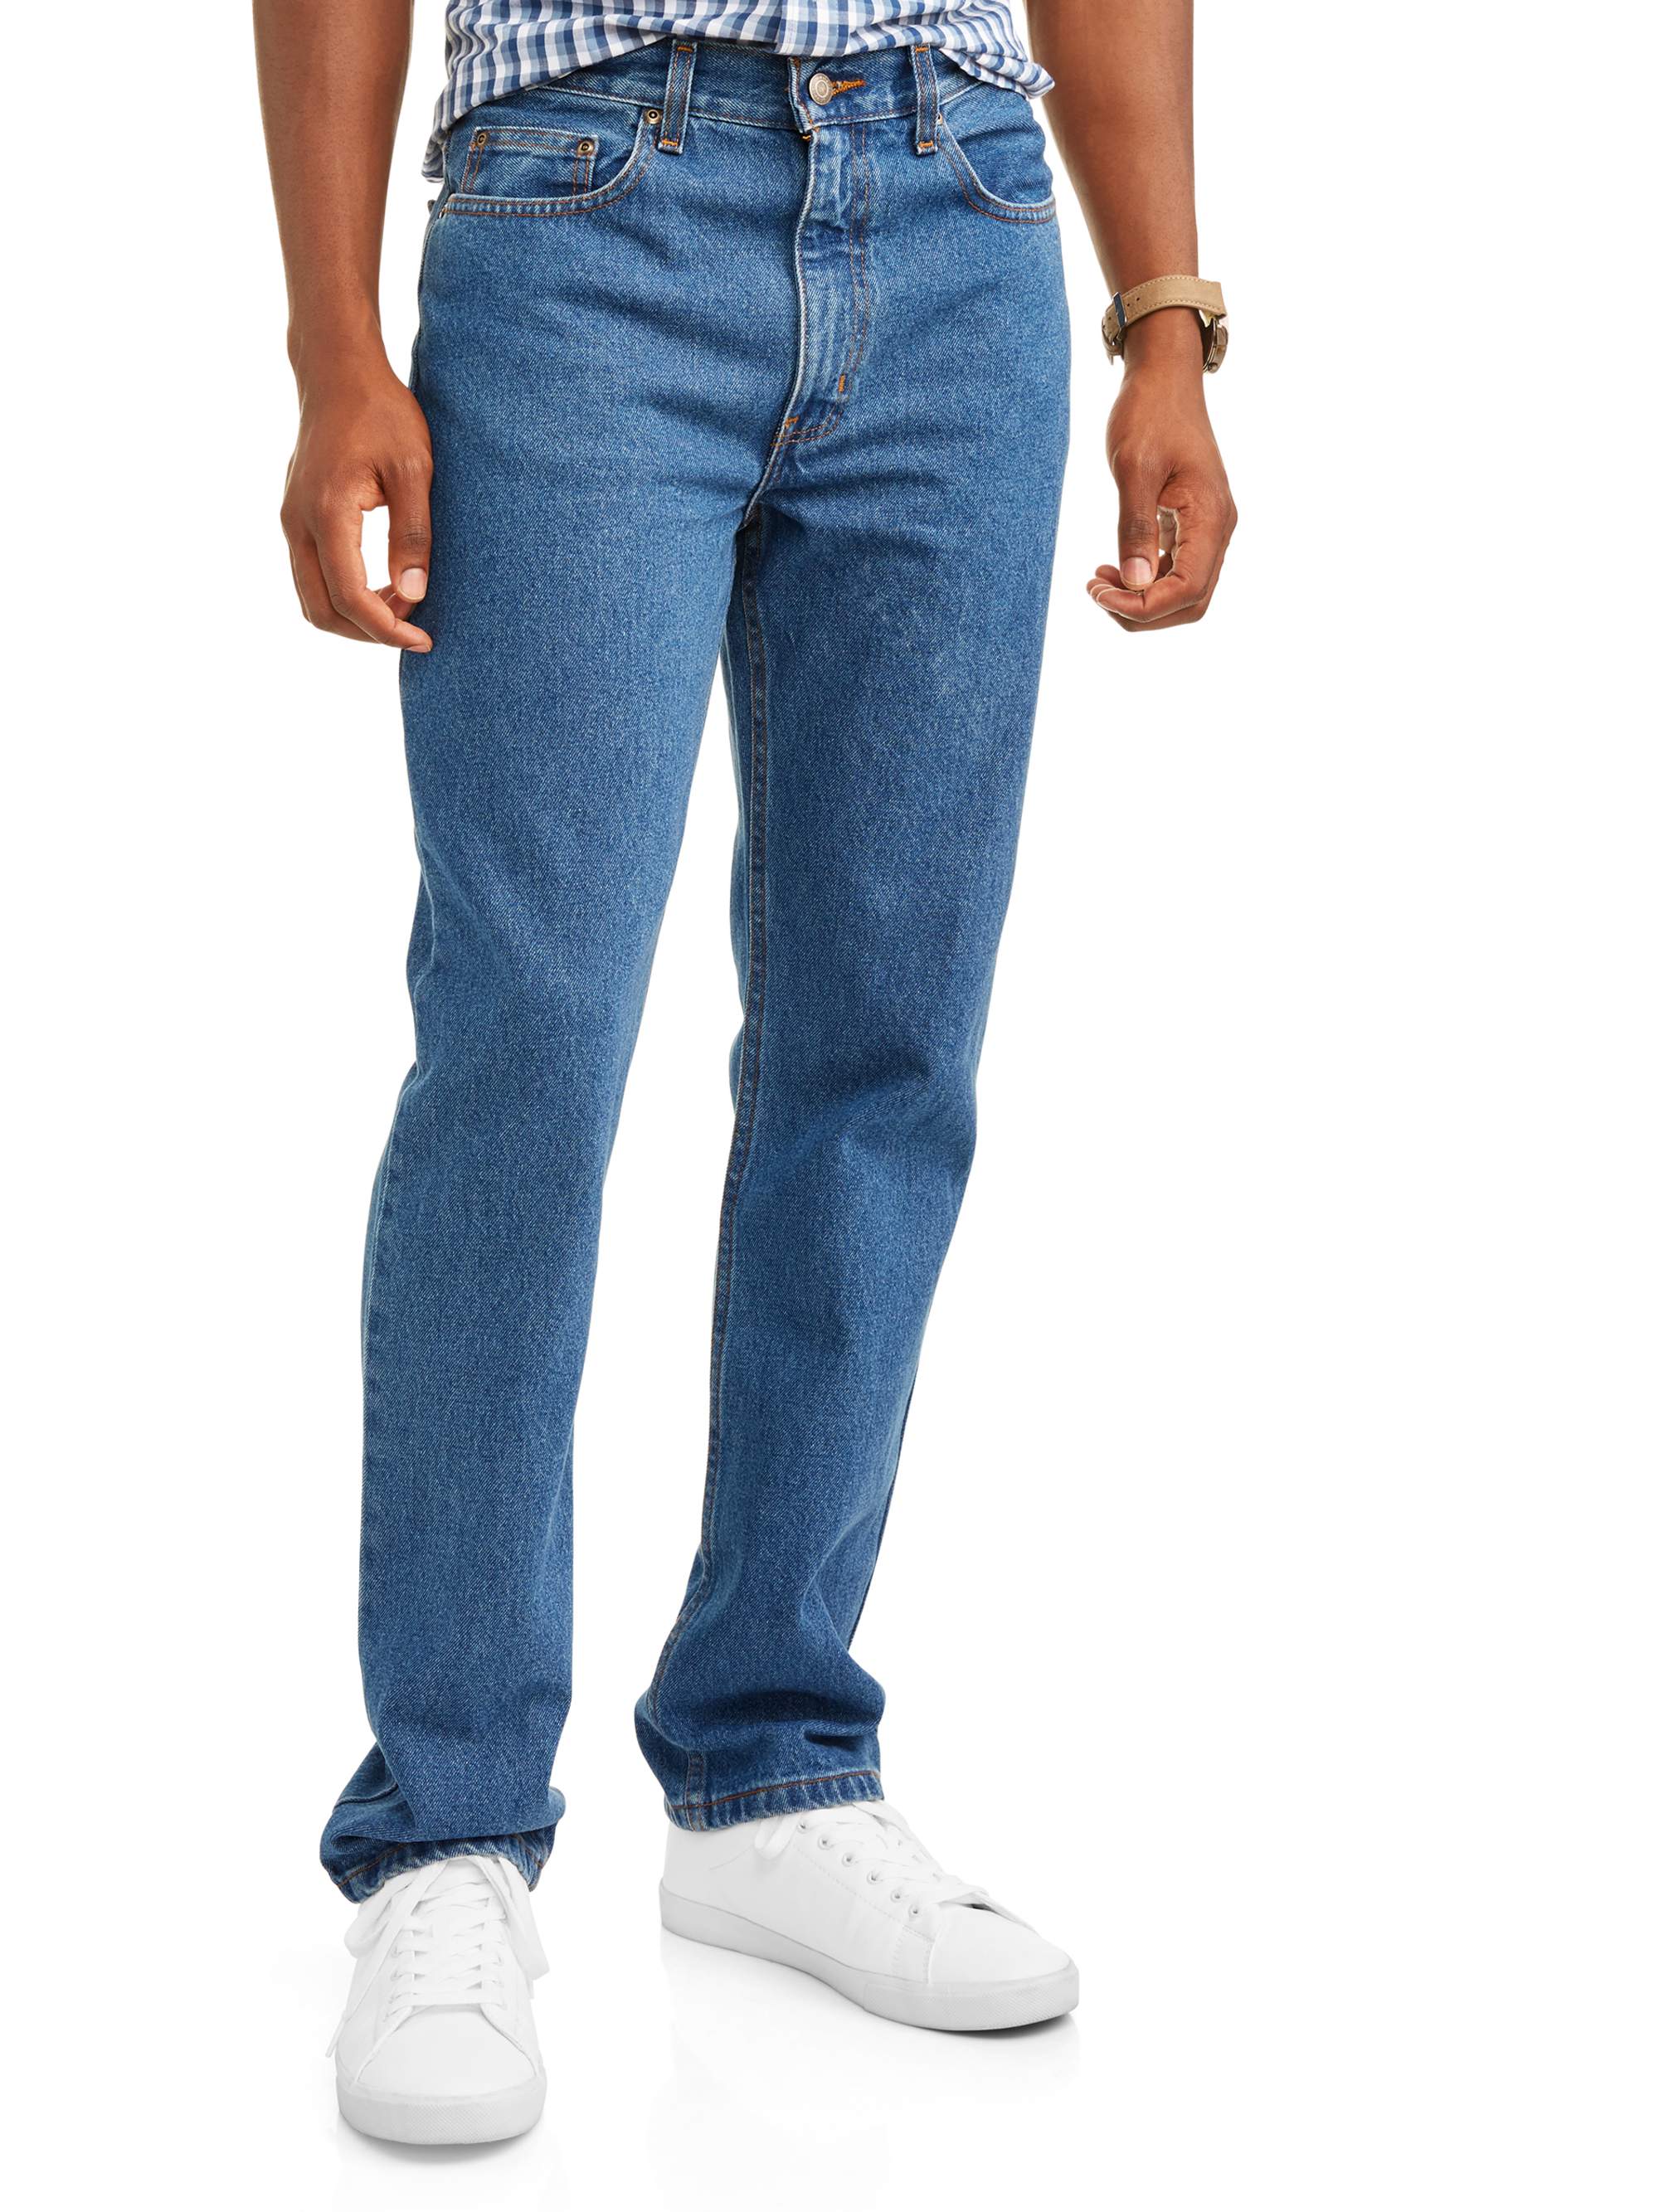 George Men's 100% Cotton Regular Fit Jeans, 2-Pack - image 2 of 7